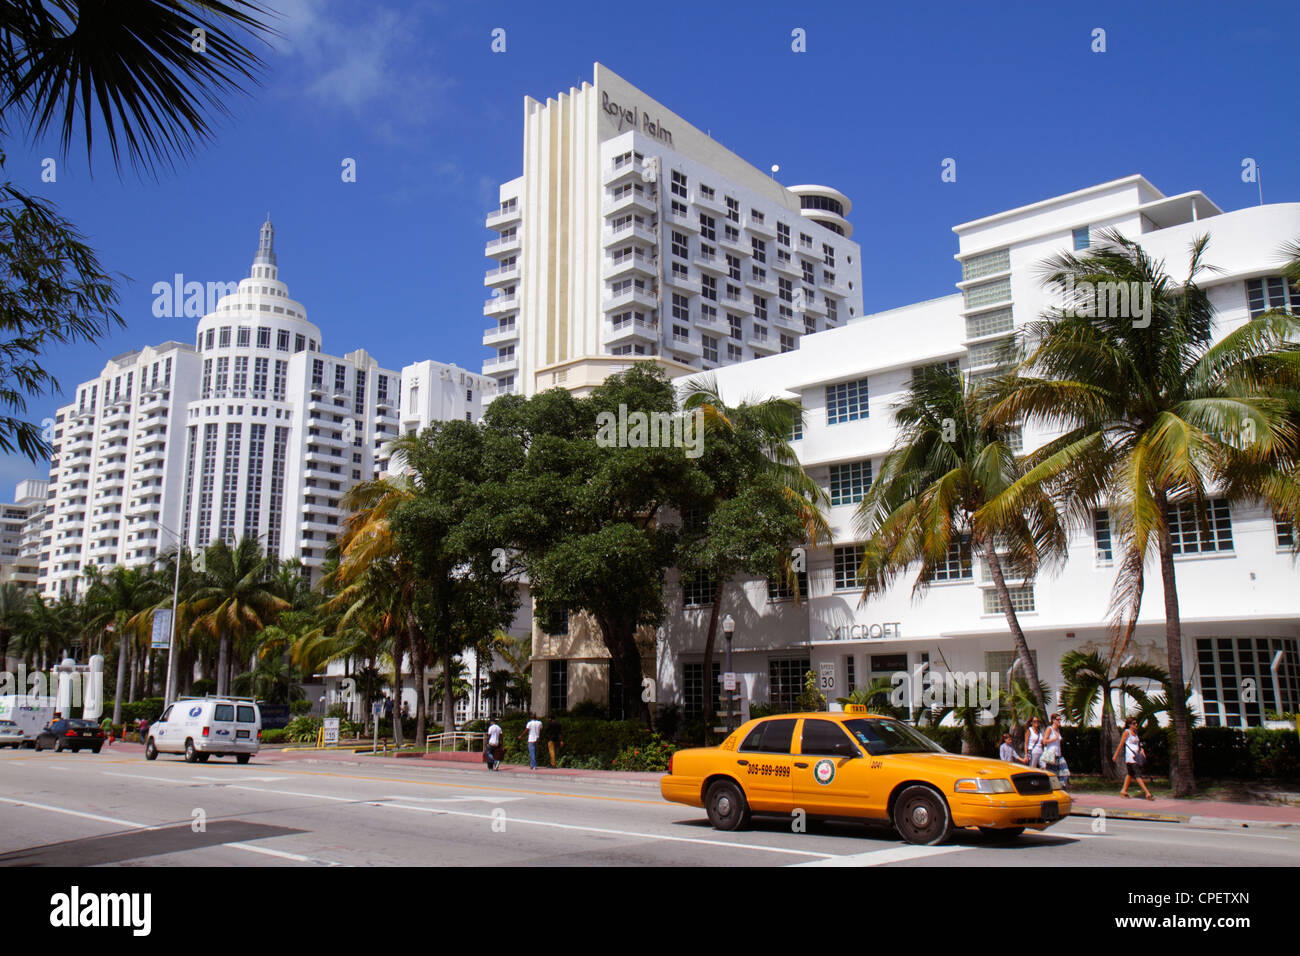 Miami Beach Florida,Collins Avenue,Royal Palm,Loews,hotel hotels lodging inn motel motels,hotels,street scene,visitors travel traveling tour tourist t Stock Photo